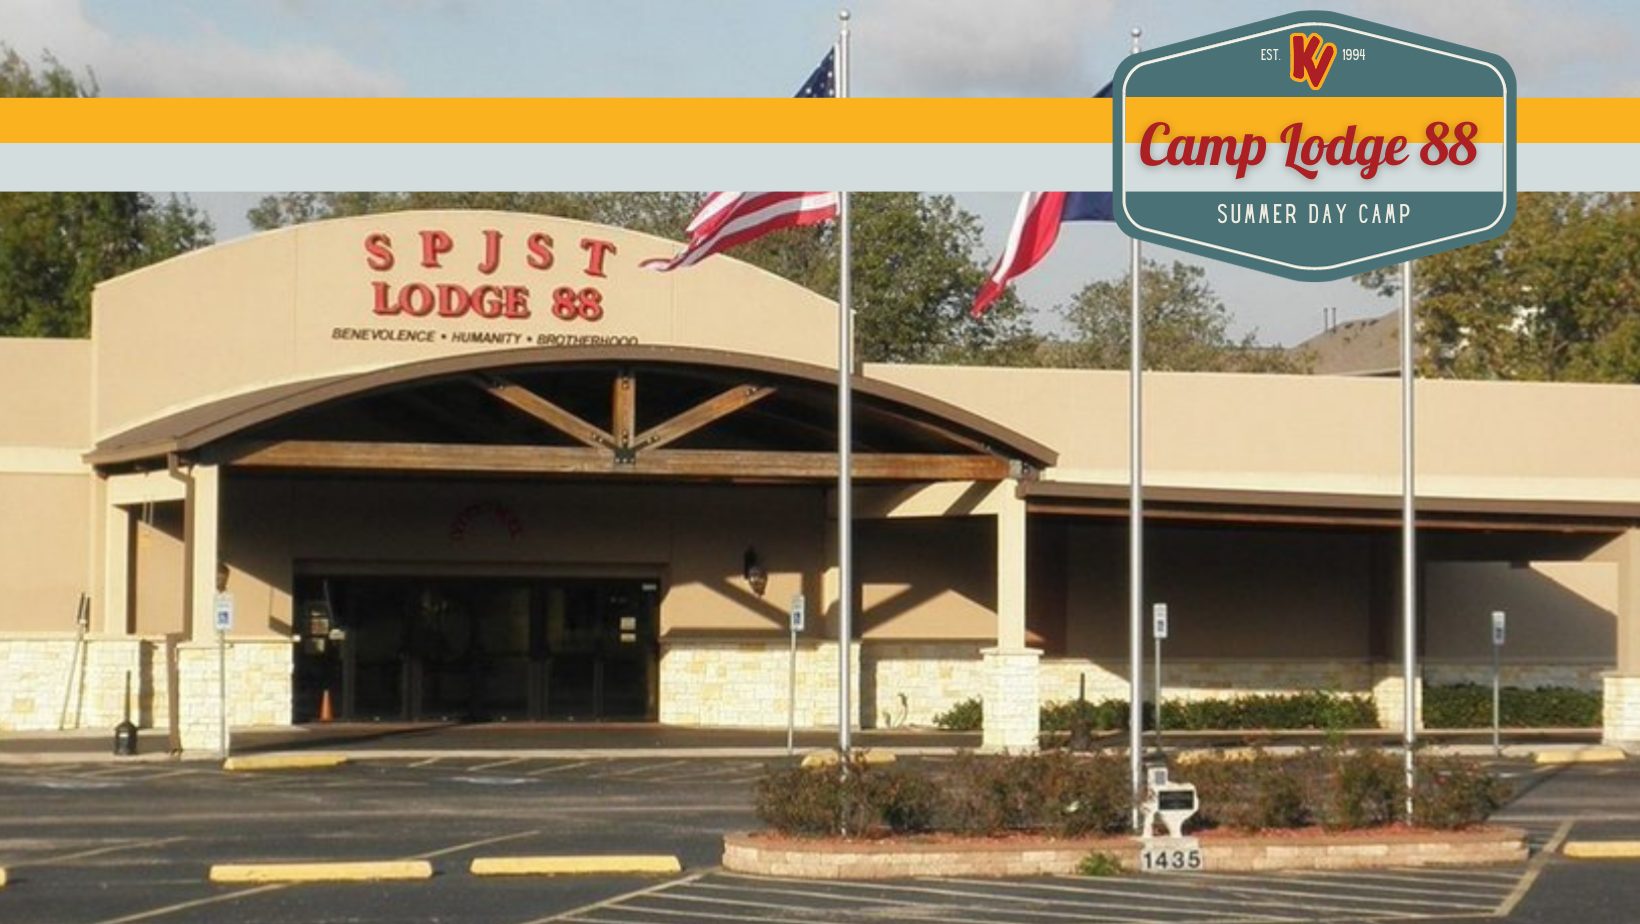 Camp Lodge 88